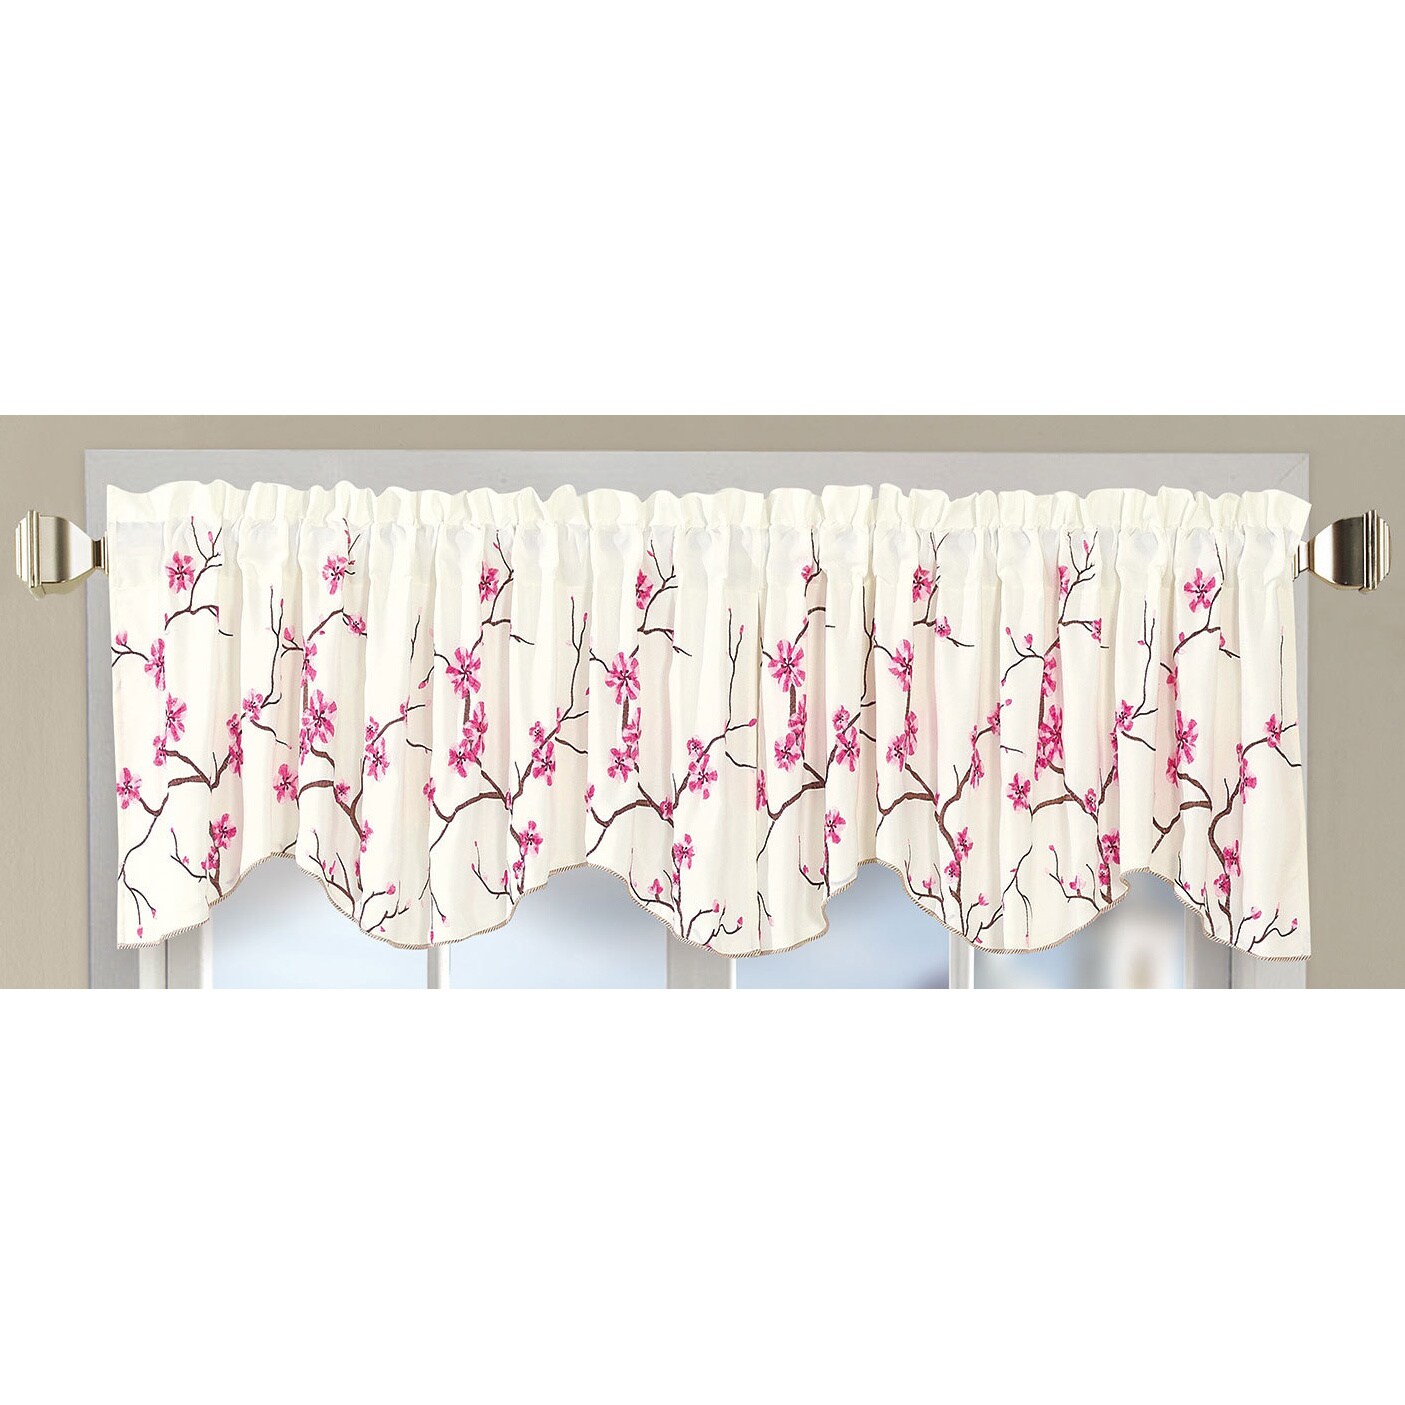 60" x 19" Cherry Blossom Embroidery Window Single Panel Curtain Valance